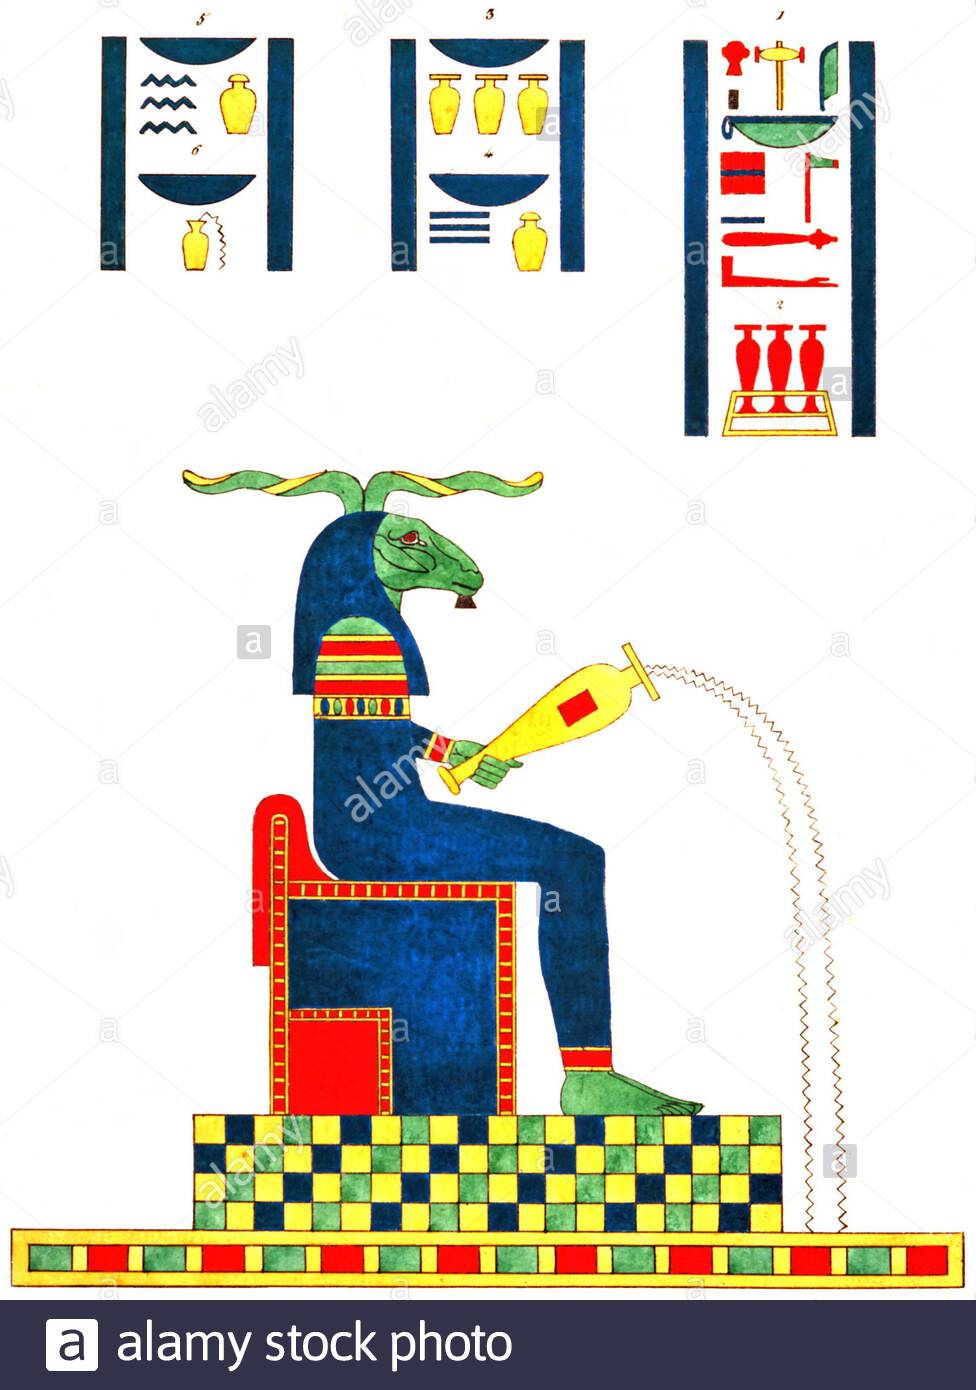 Ancient Egypt, Khnemu, vintage illustration from 1823 Stock Photo